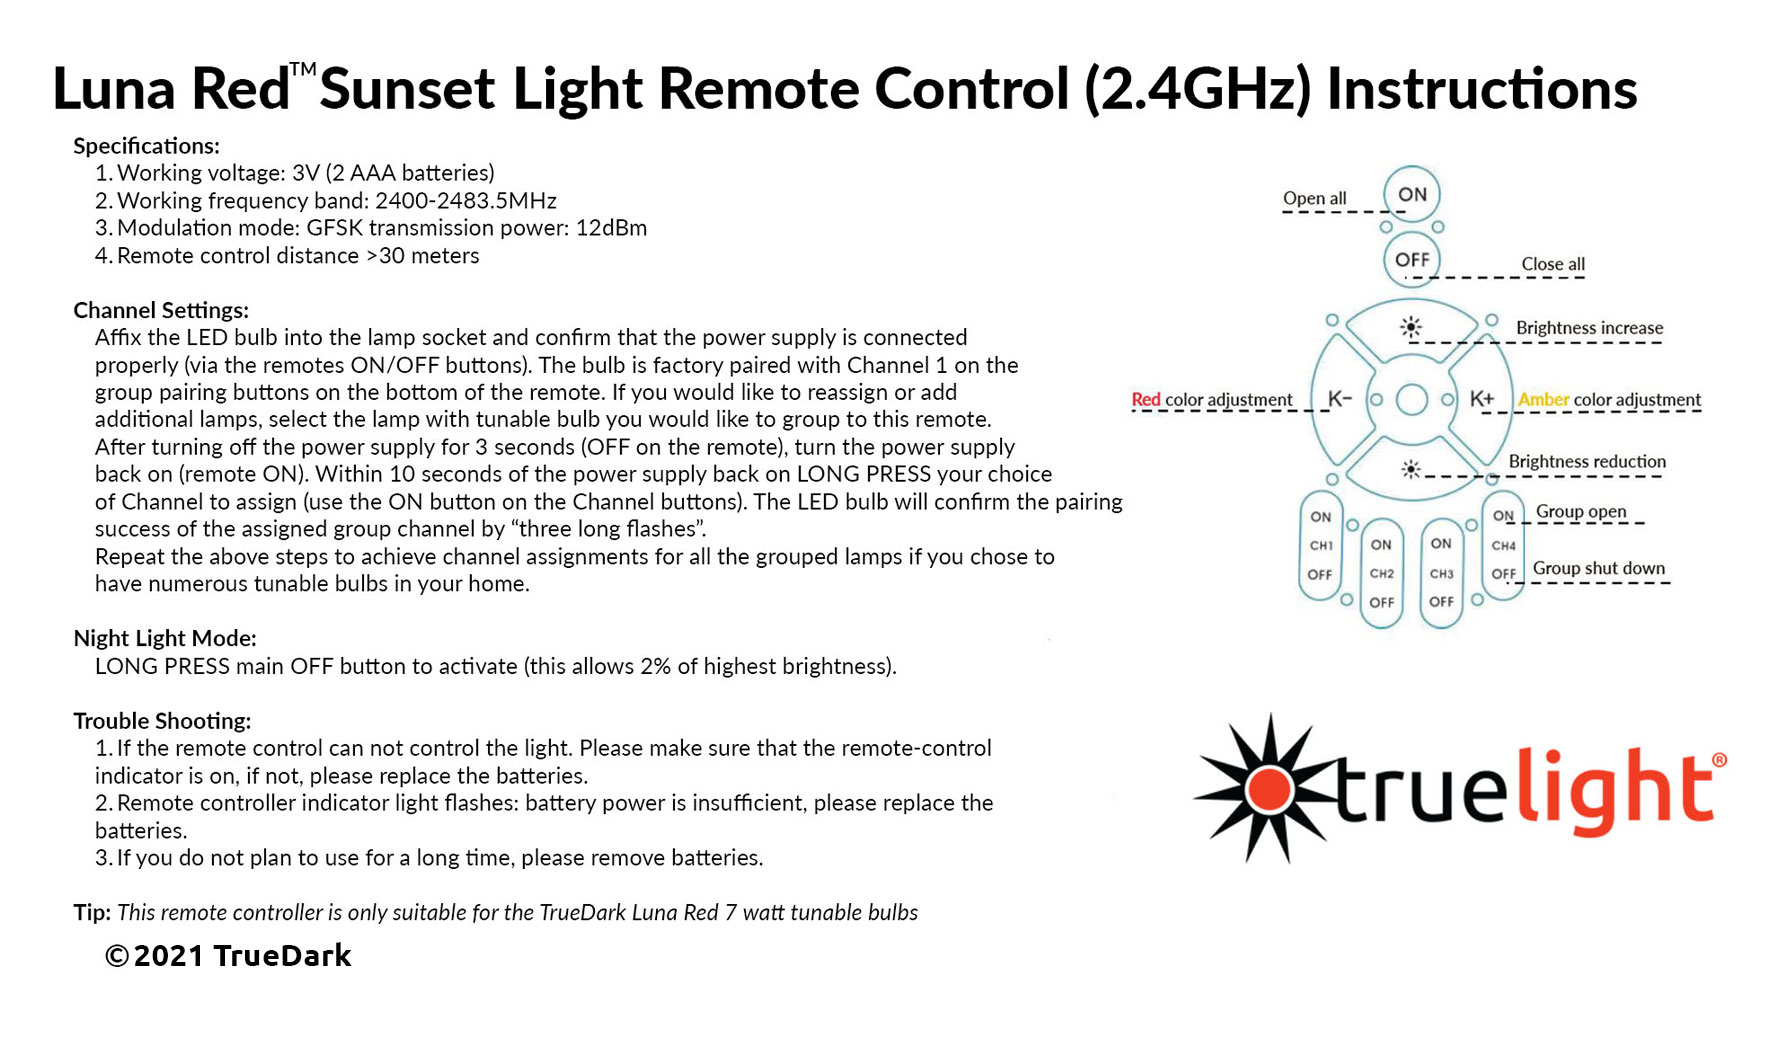 TrueLight Luna Red Sunset Light Remote Instructions